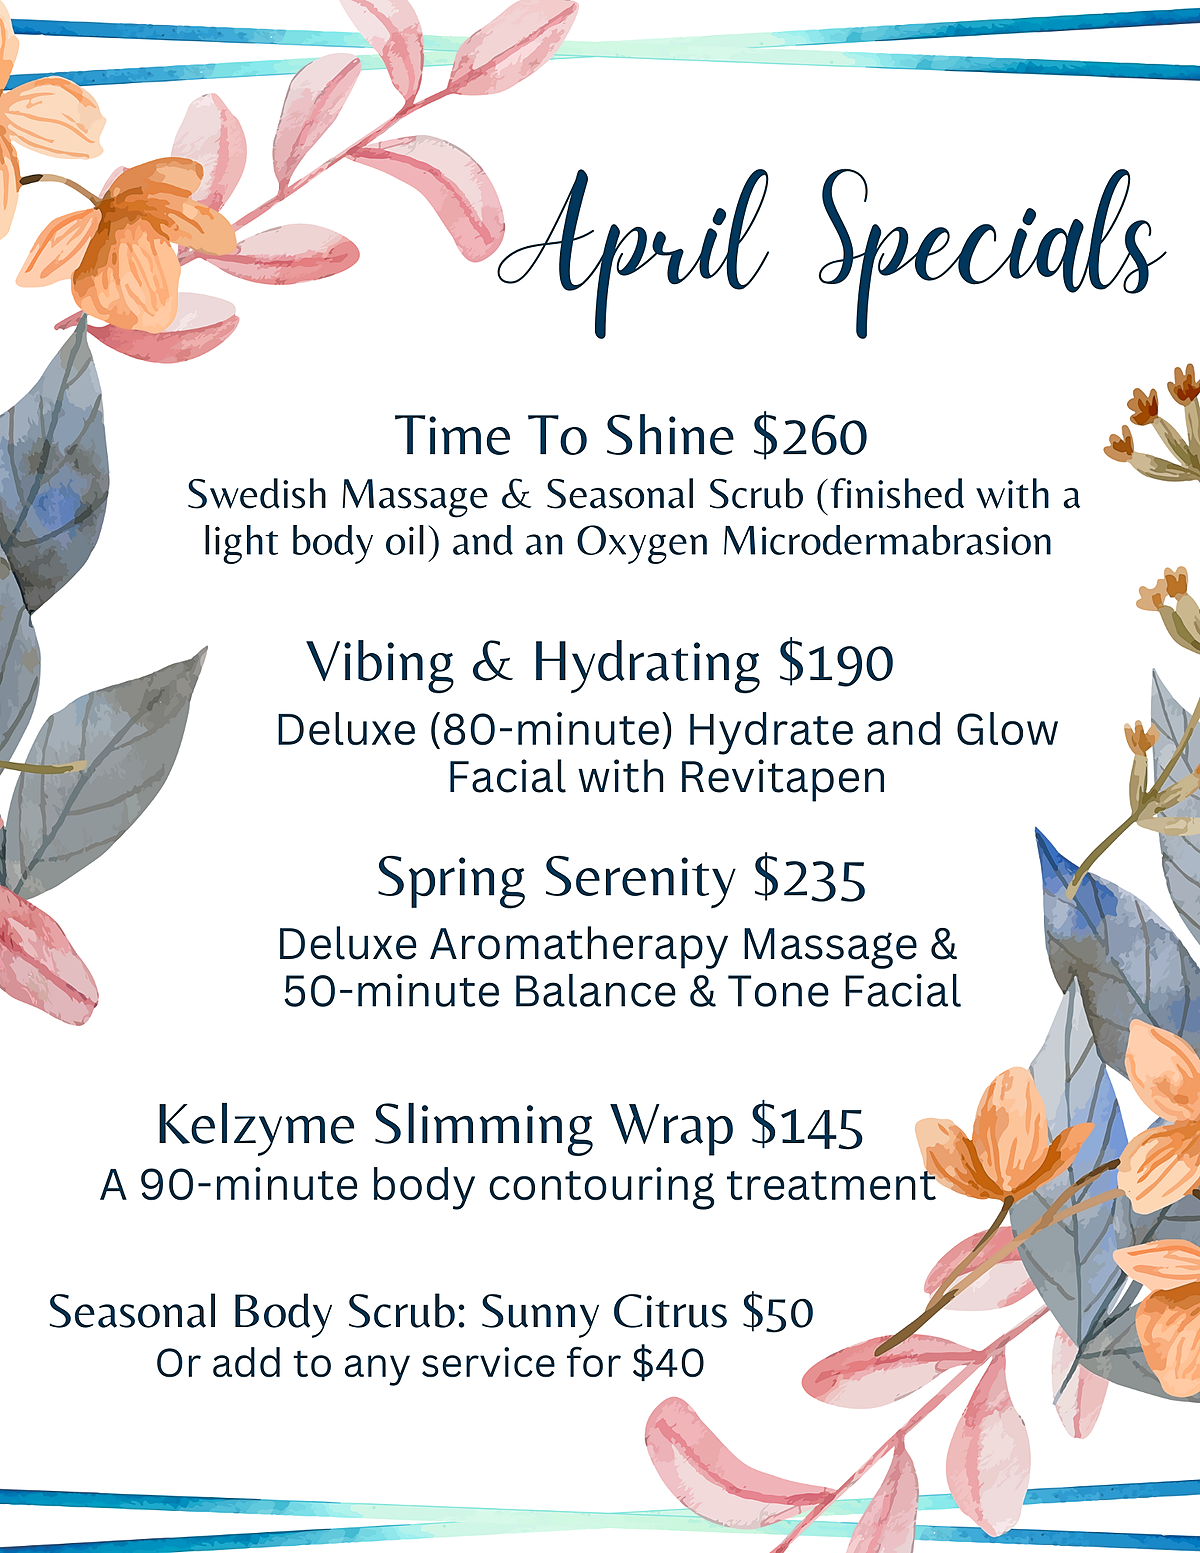 April Specials Offer | Sutera Spa in Flower Mound, TX